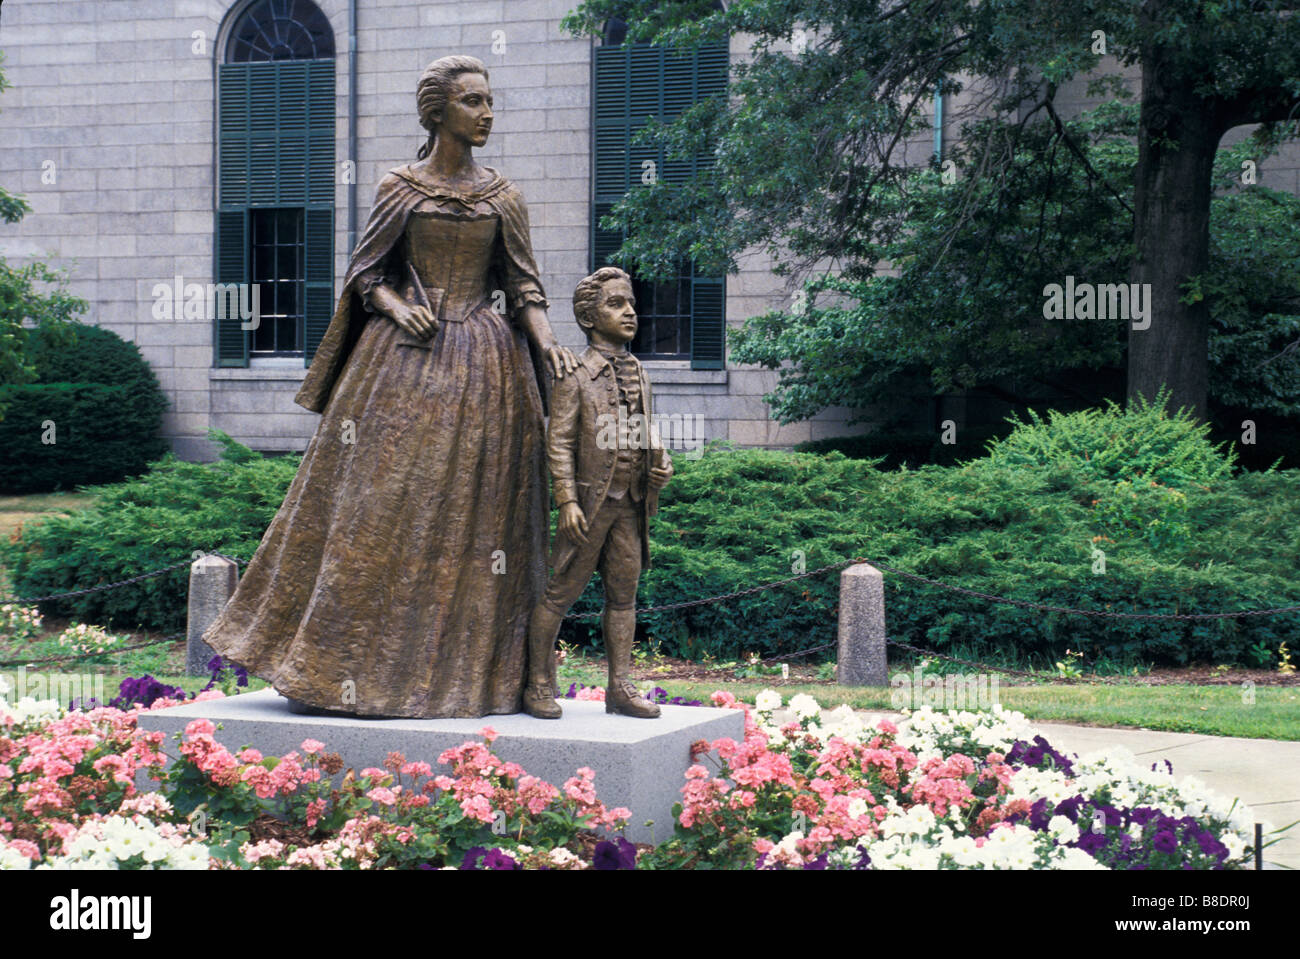 Abigail Adams mit ihrem Sohn John Quincy Adams memorial Statue außerhalb der Kirche der Adams Family in Quincy, Massachusetts. Foto Stockfoto